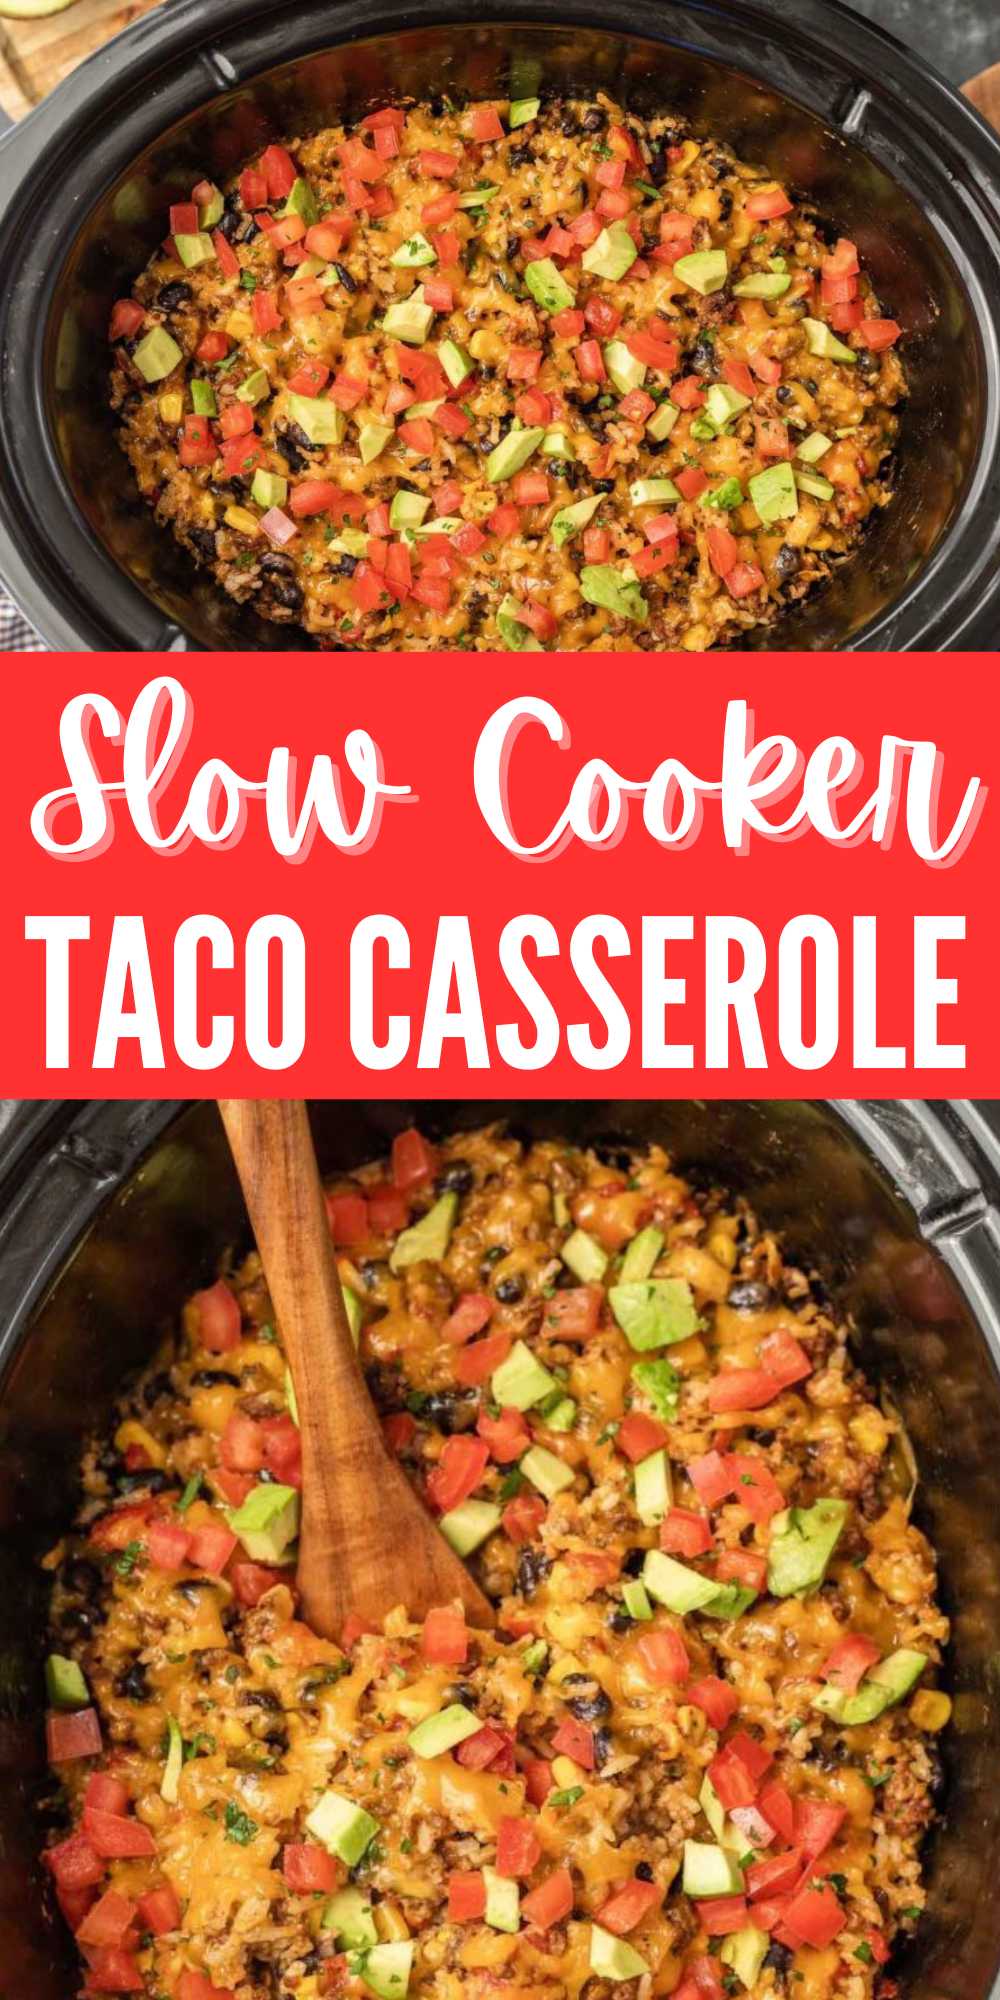 Slow-Cooker Taco Casserole Recipe 